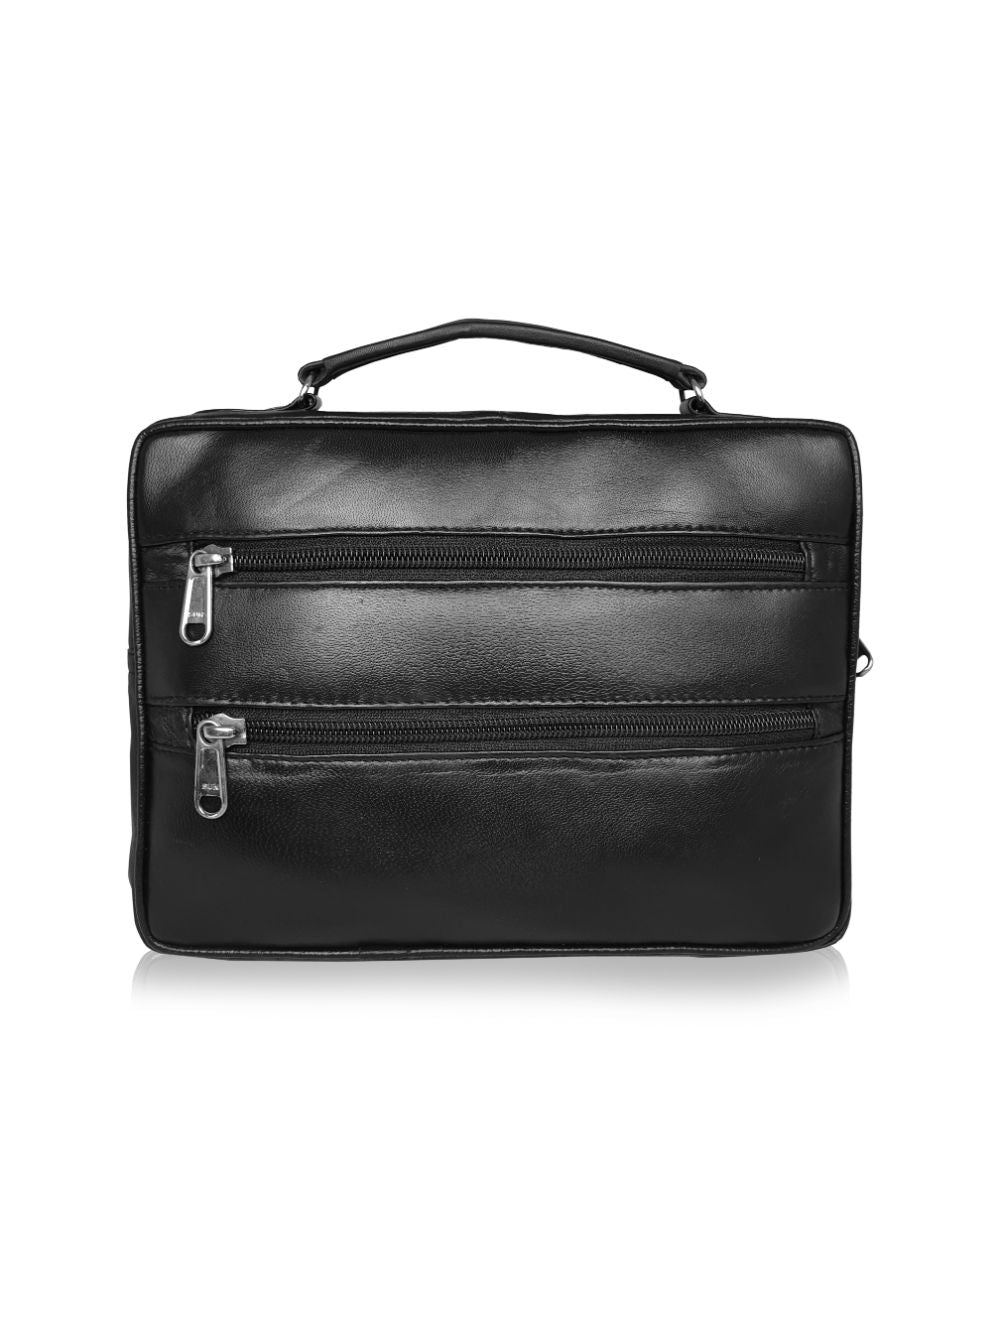 Roamlite Travel Orginizer bag Black Leather RL521 back